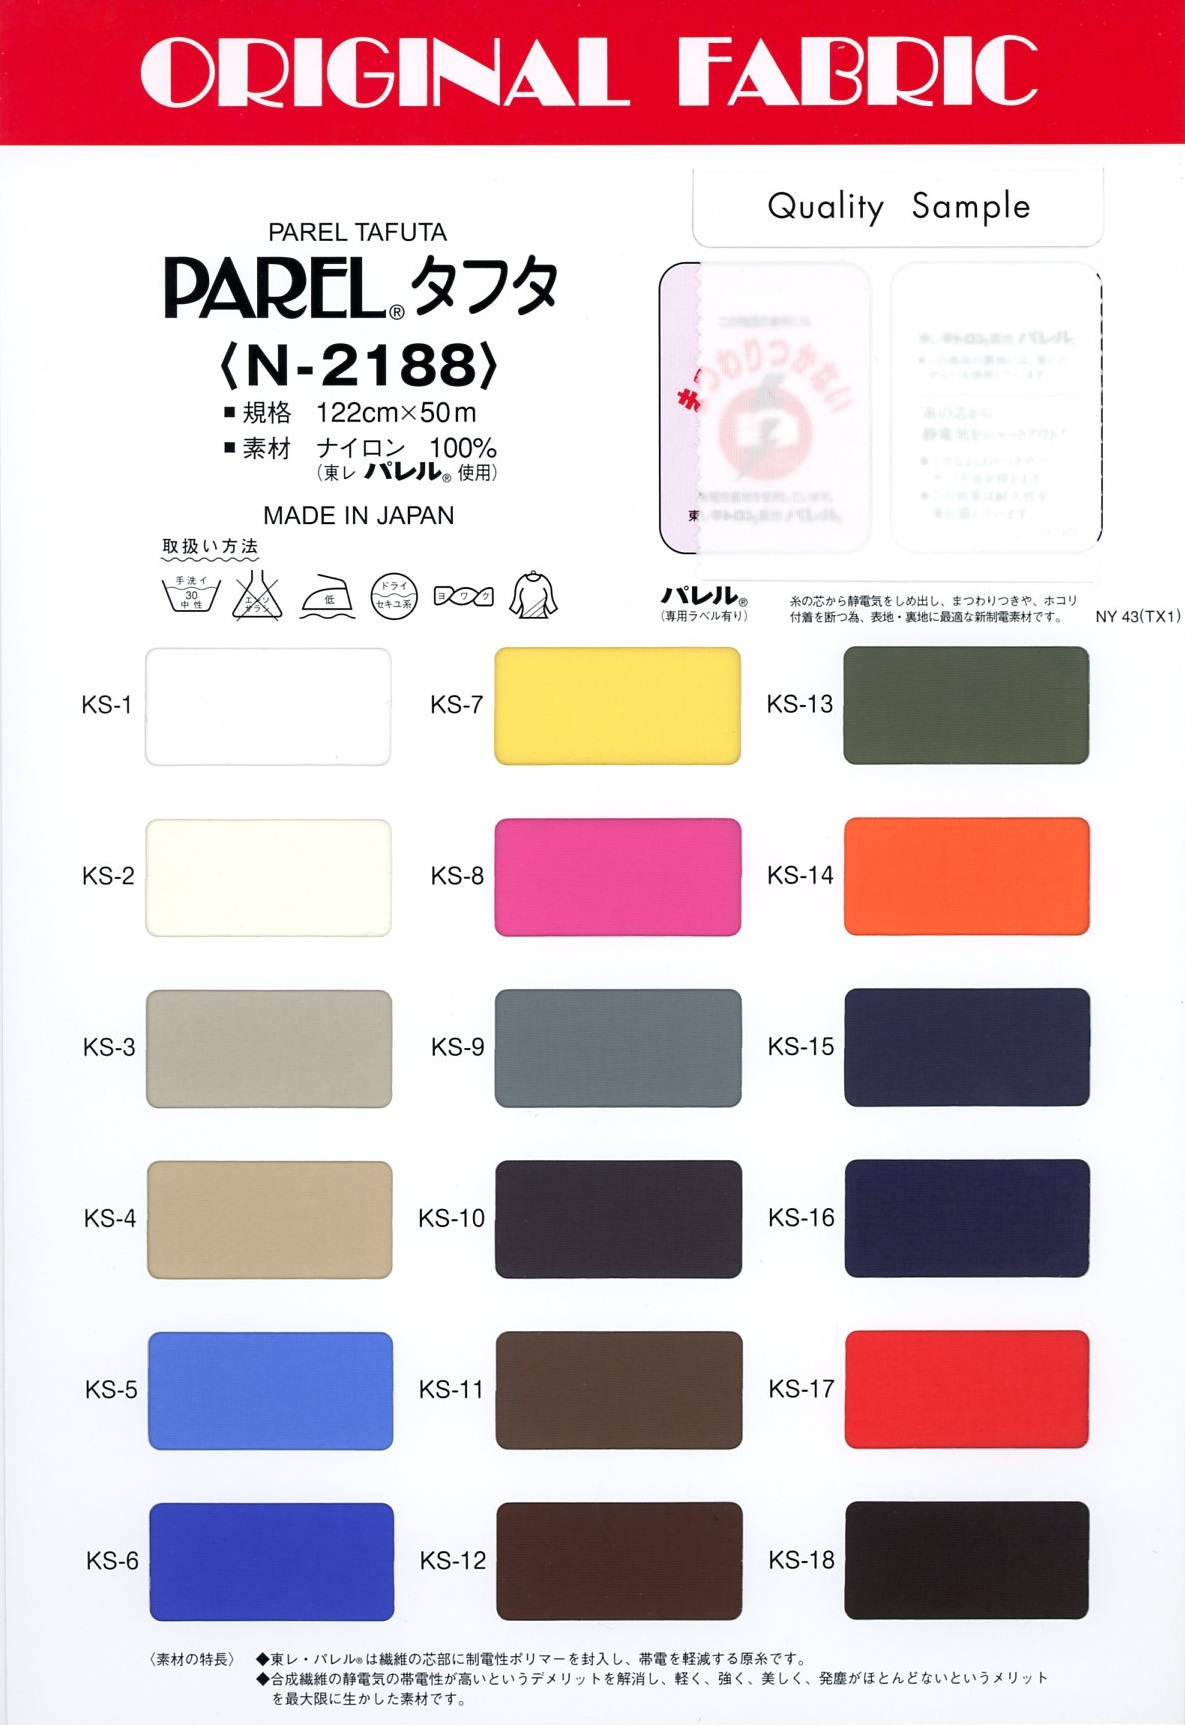 N-2188 PAREL® Taffeta[Textile / Fabric] Masuda